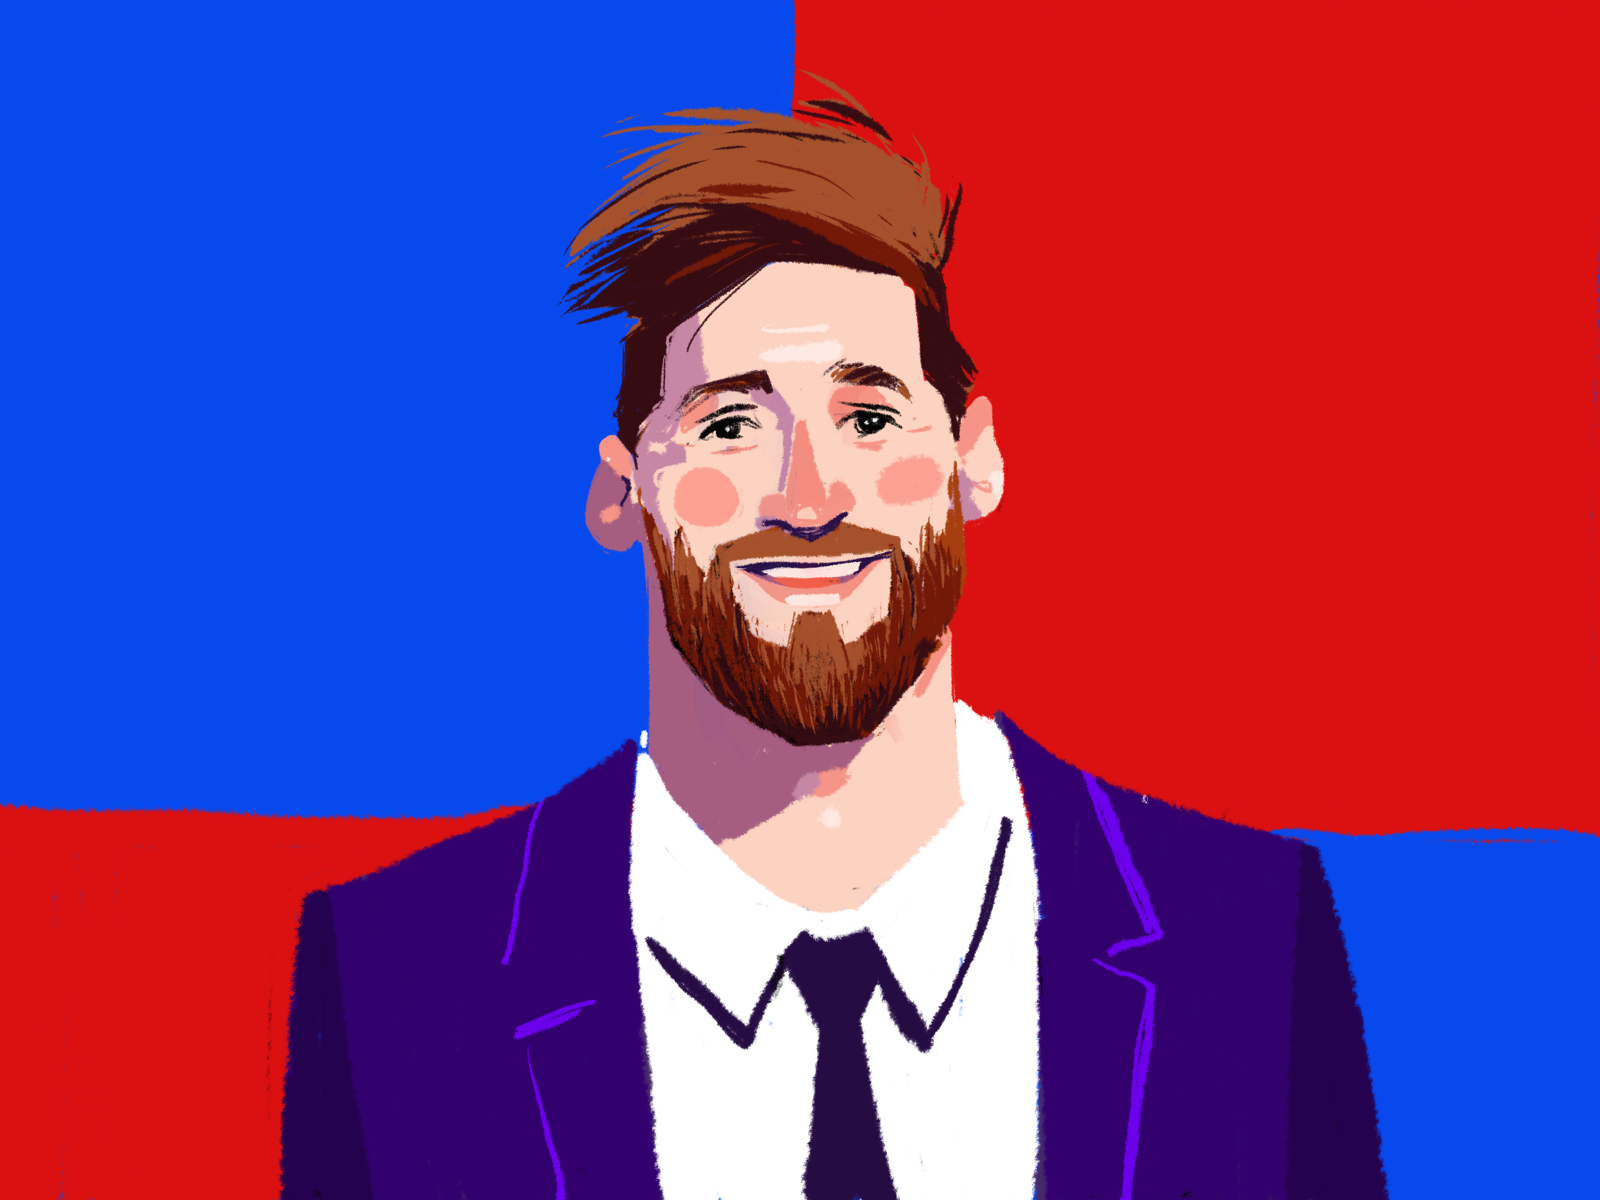 Messi cartoon art Wallpapers Download | MobCup